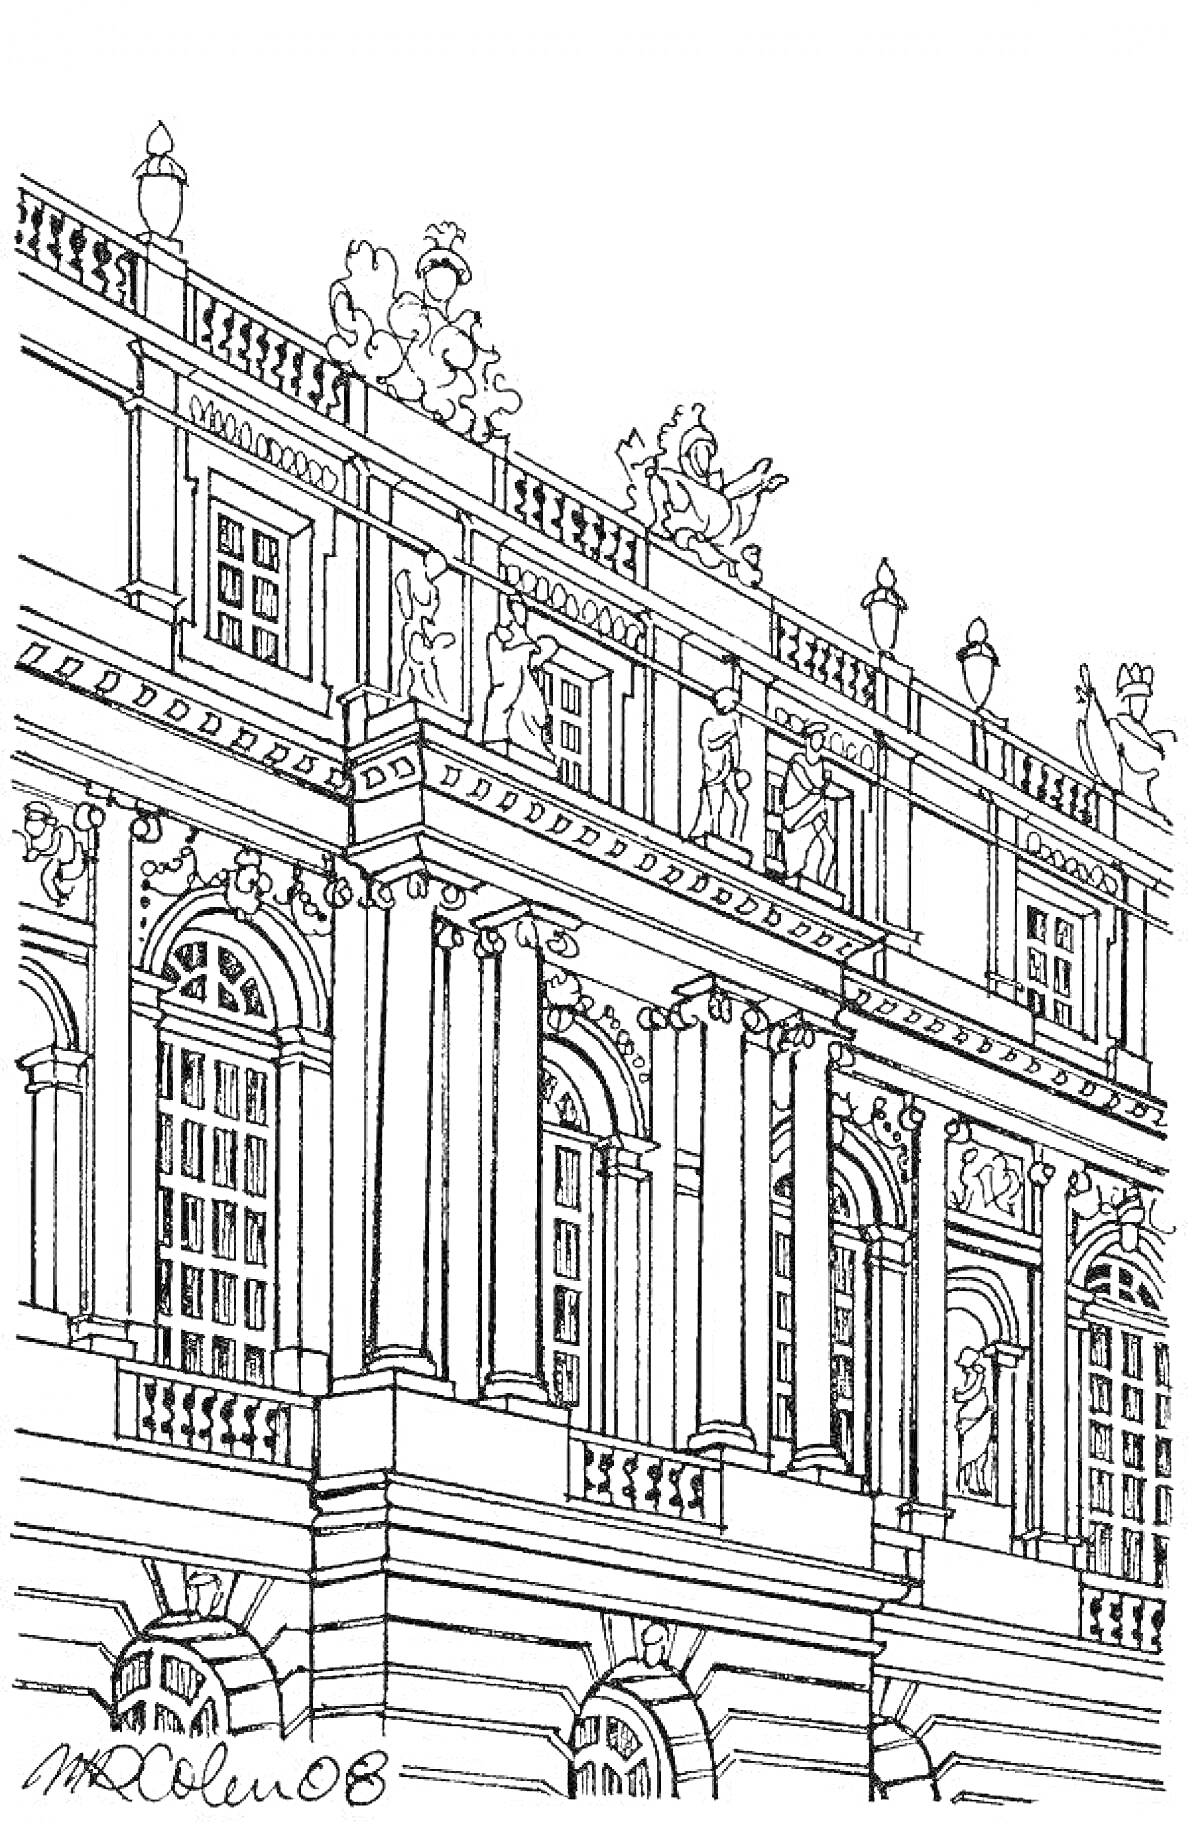 Раскраска Эрмитаж. Фрагмент фасада с колоннами, окнами и скульптурами на крыше здания